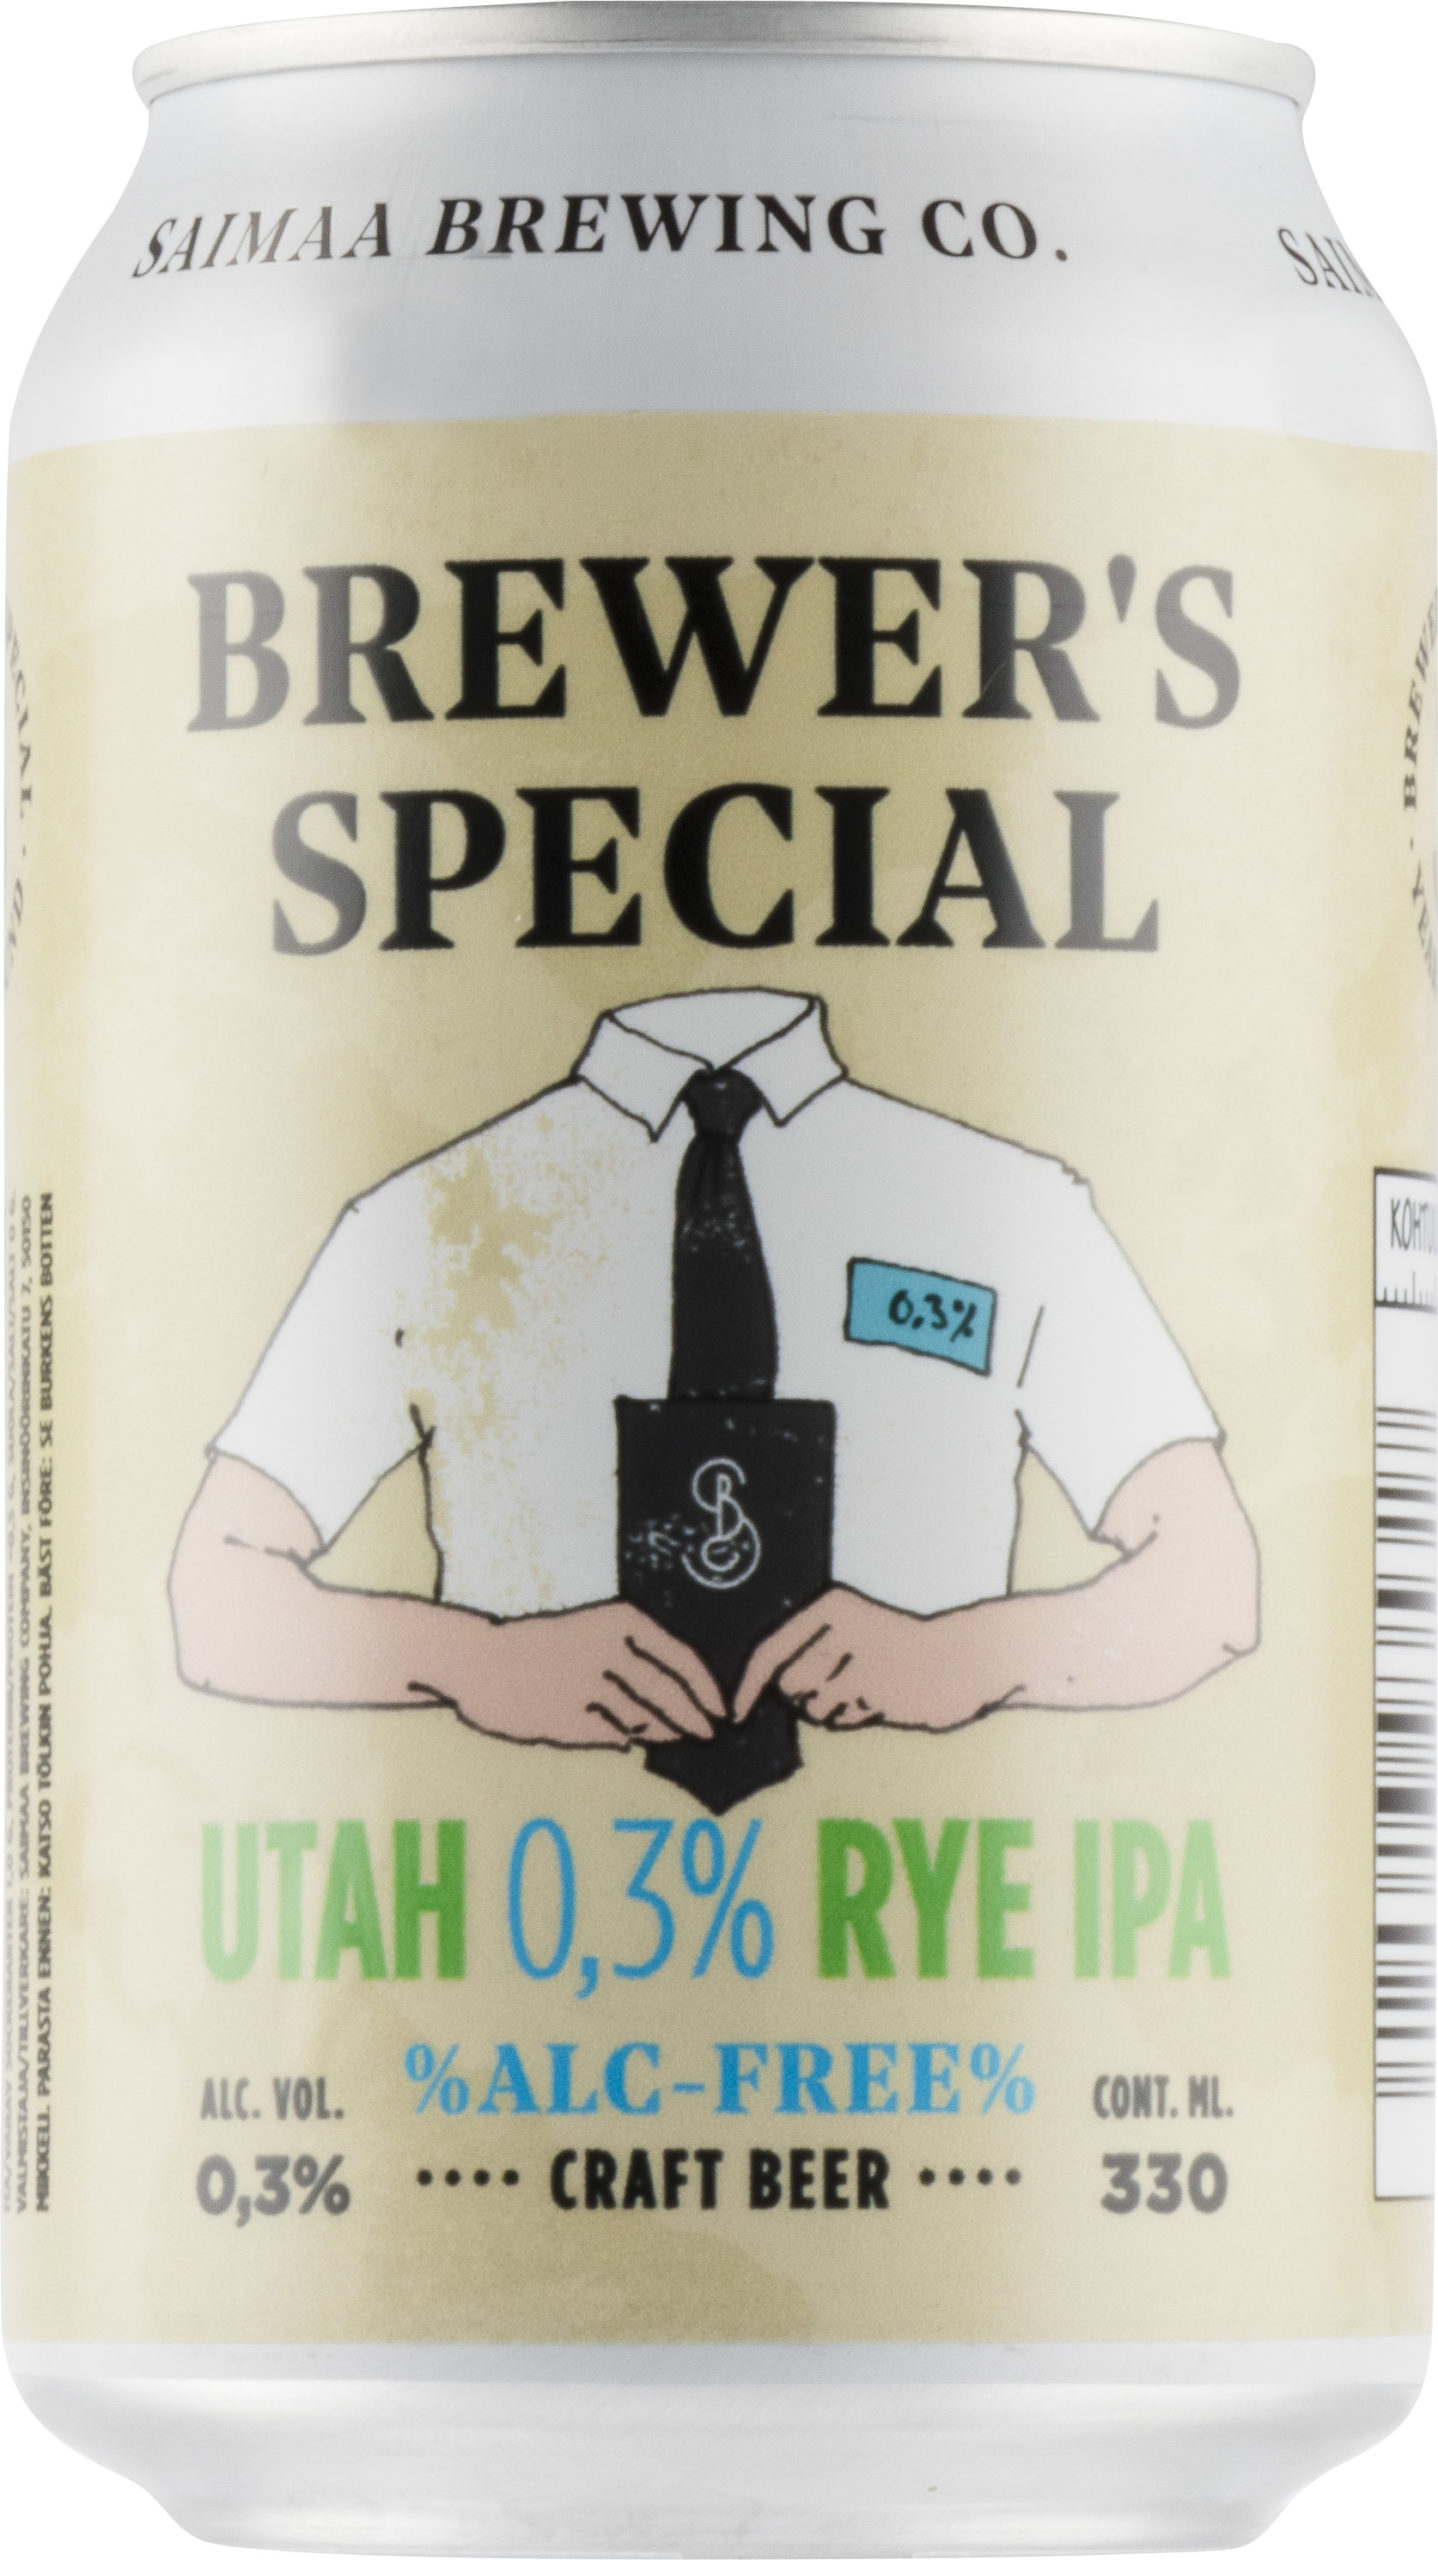 Saimaa Brewing Company Saimaa Brewer’s Special Utah 0,3% Rye Ipa can